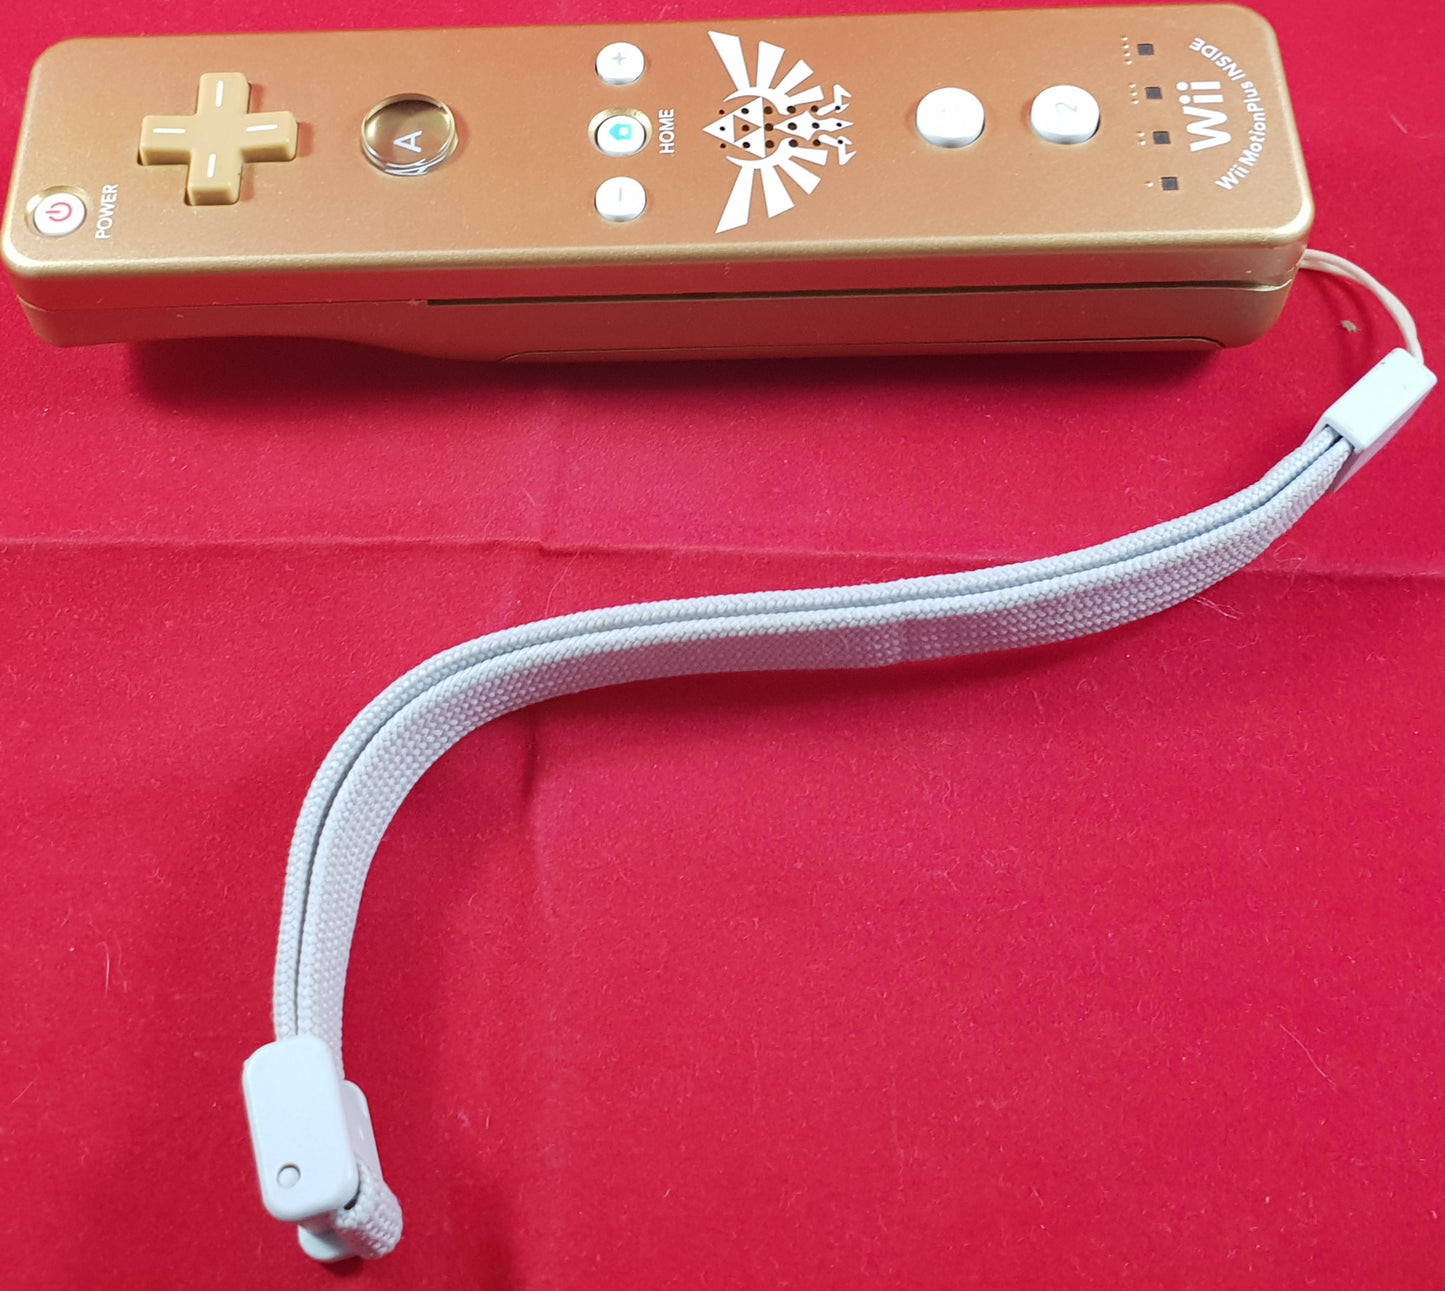 Limited Edition Zelda Skyward Sword Nintendo Wii Controller Accessory